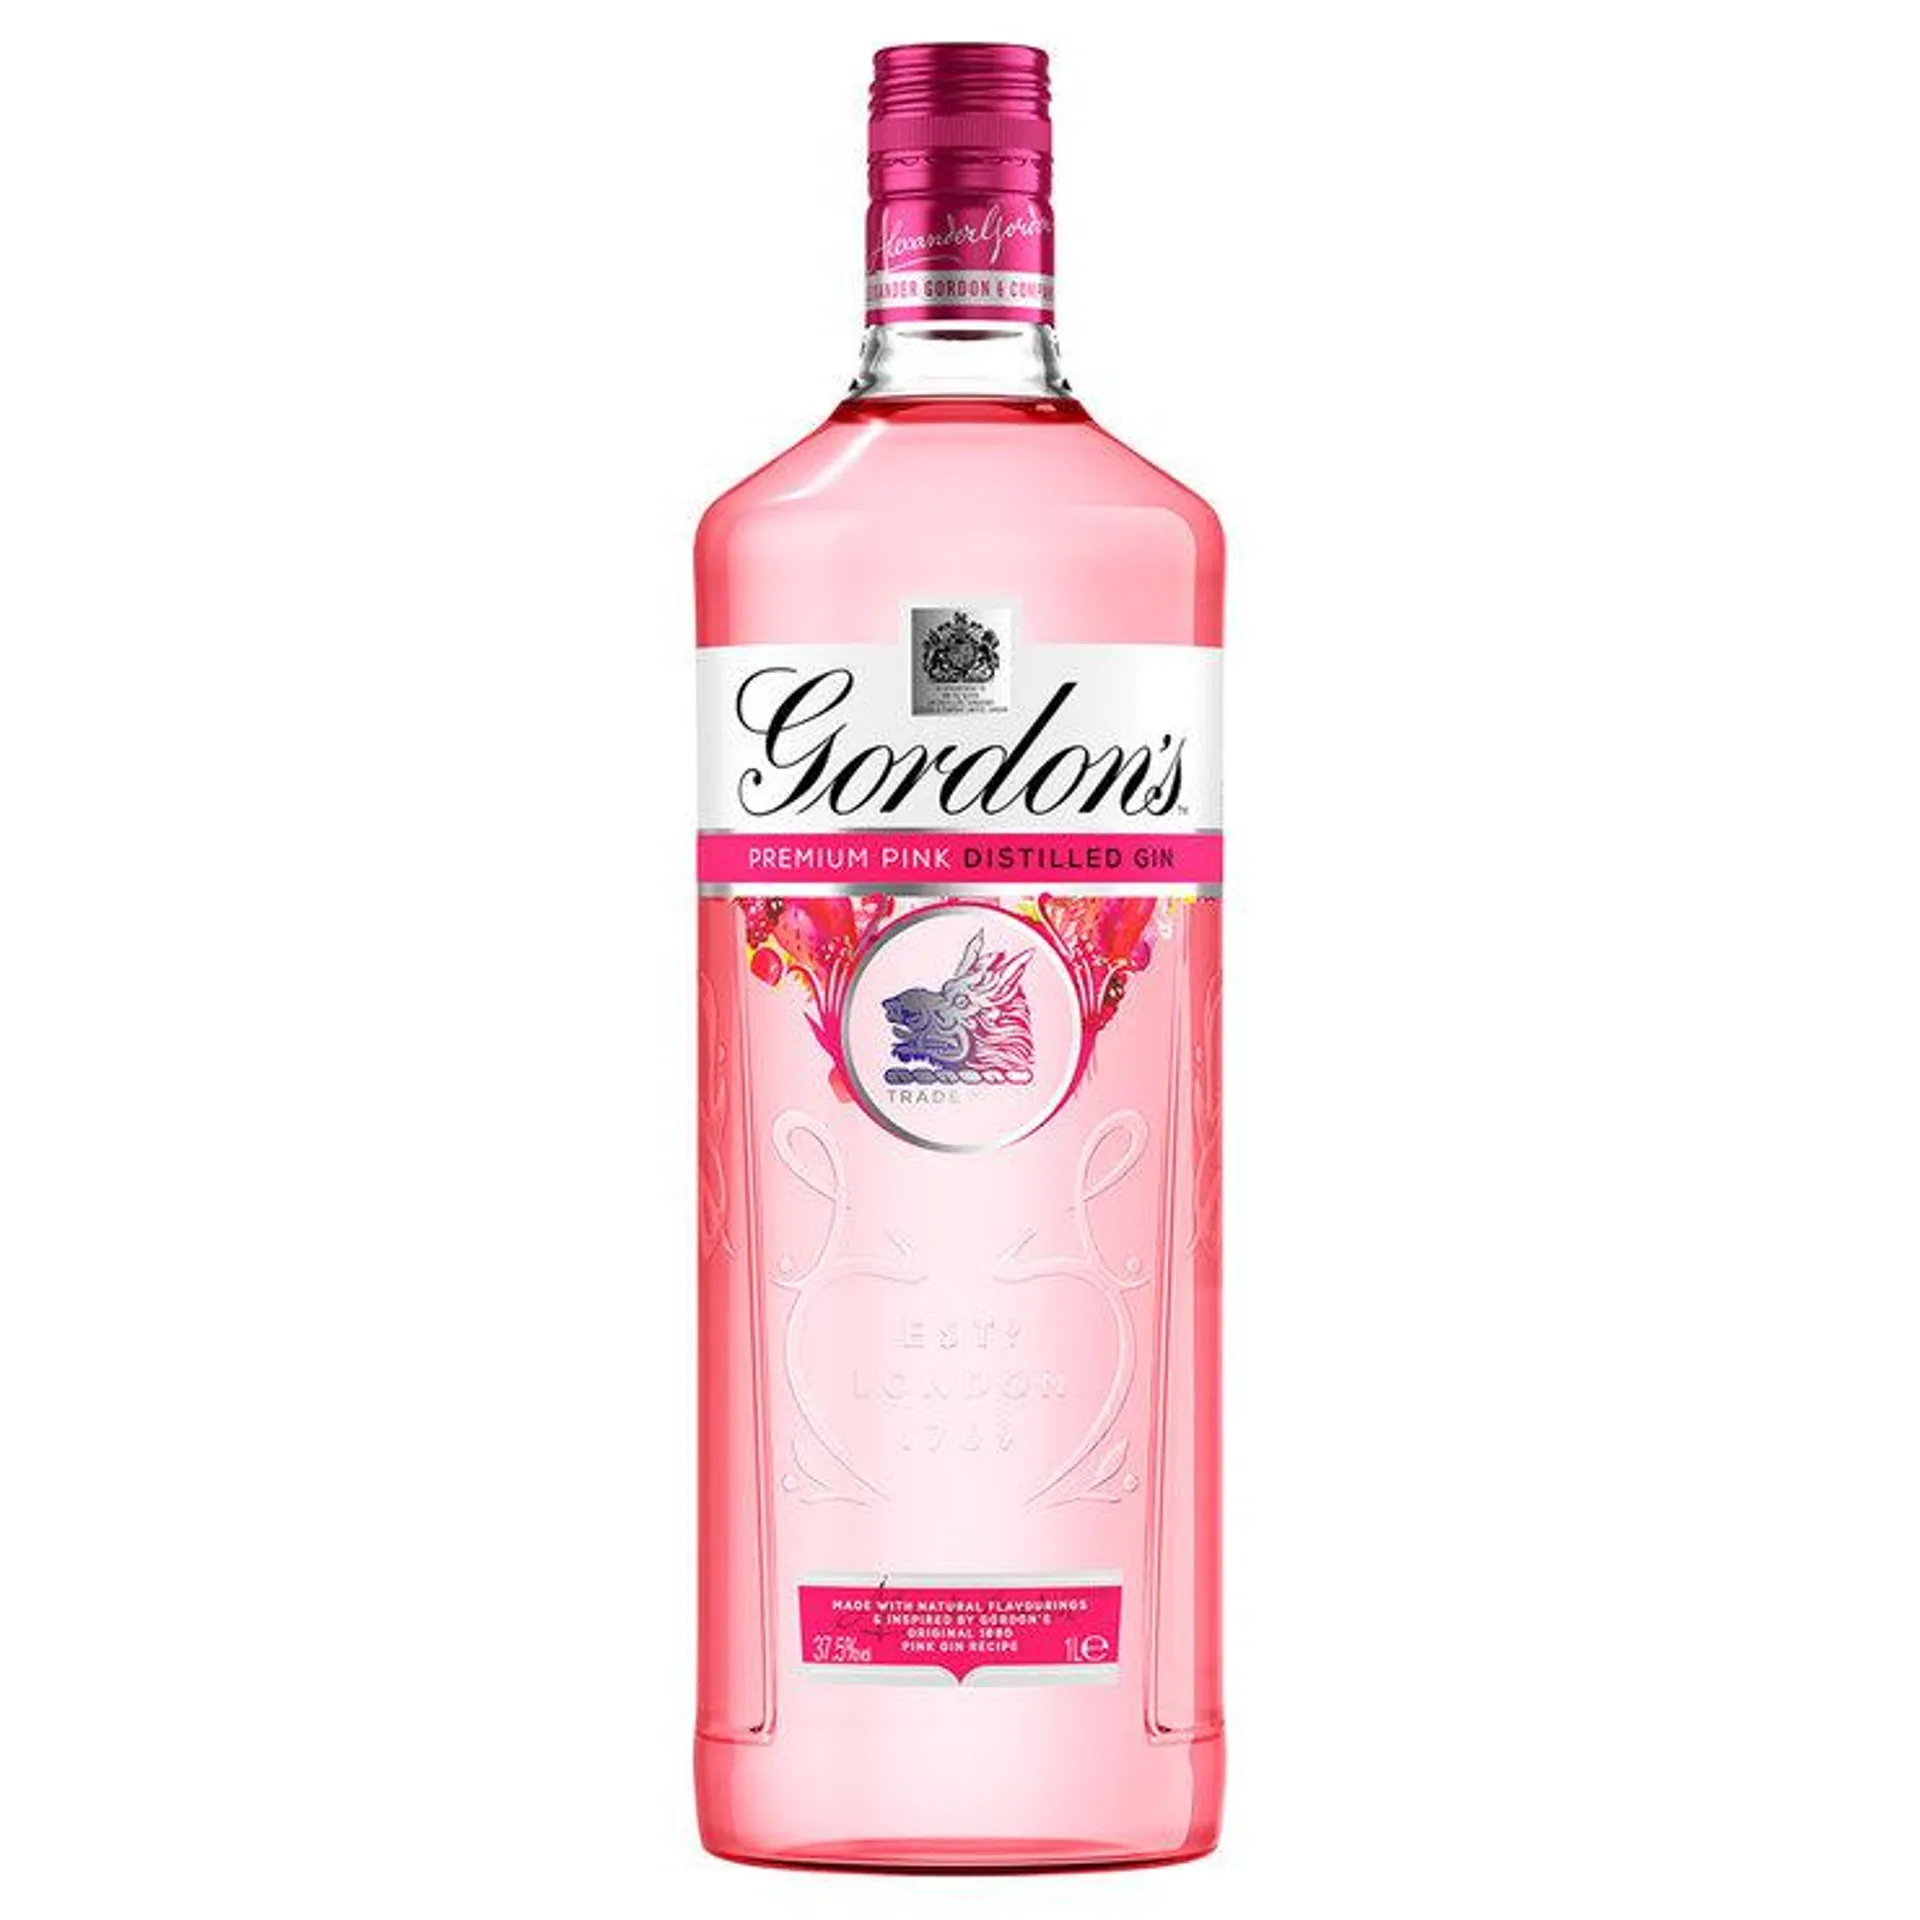 Gordon's Pink Gin, 1L